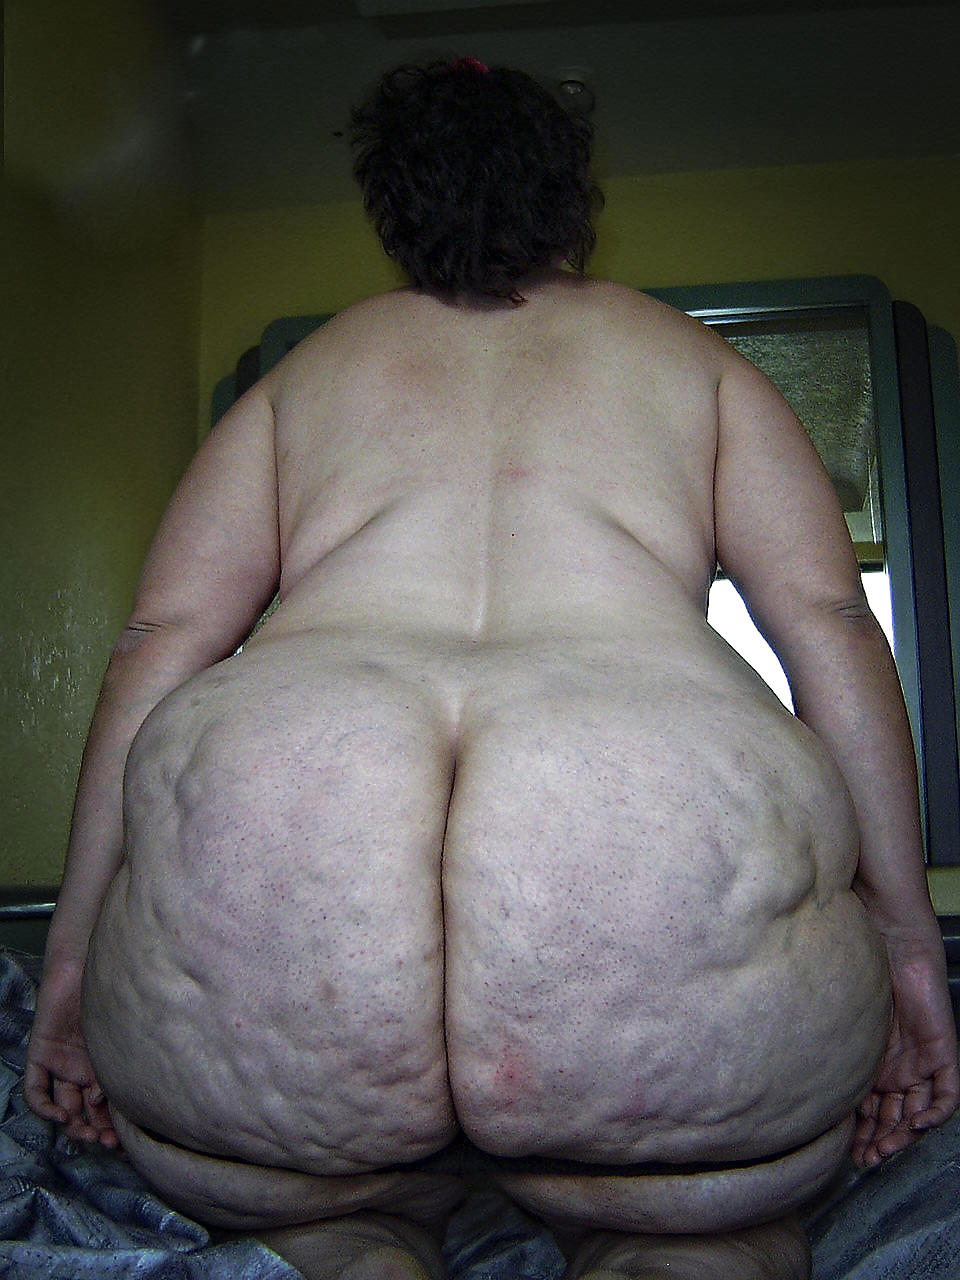 Massive fleshy buttocks 10 adult photos